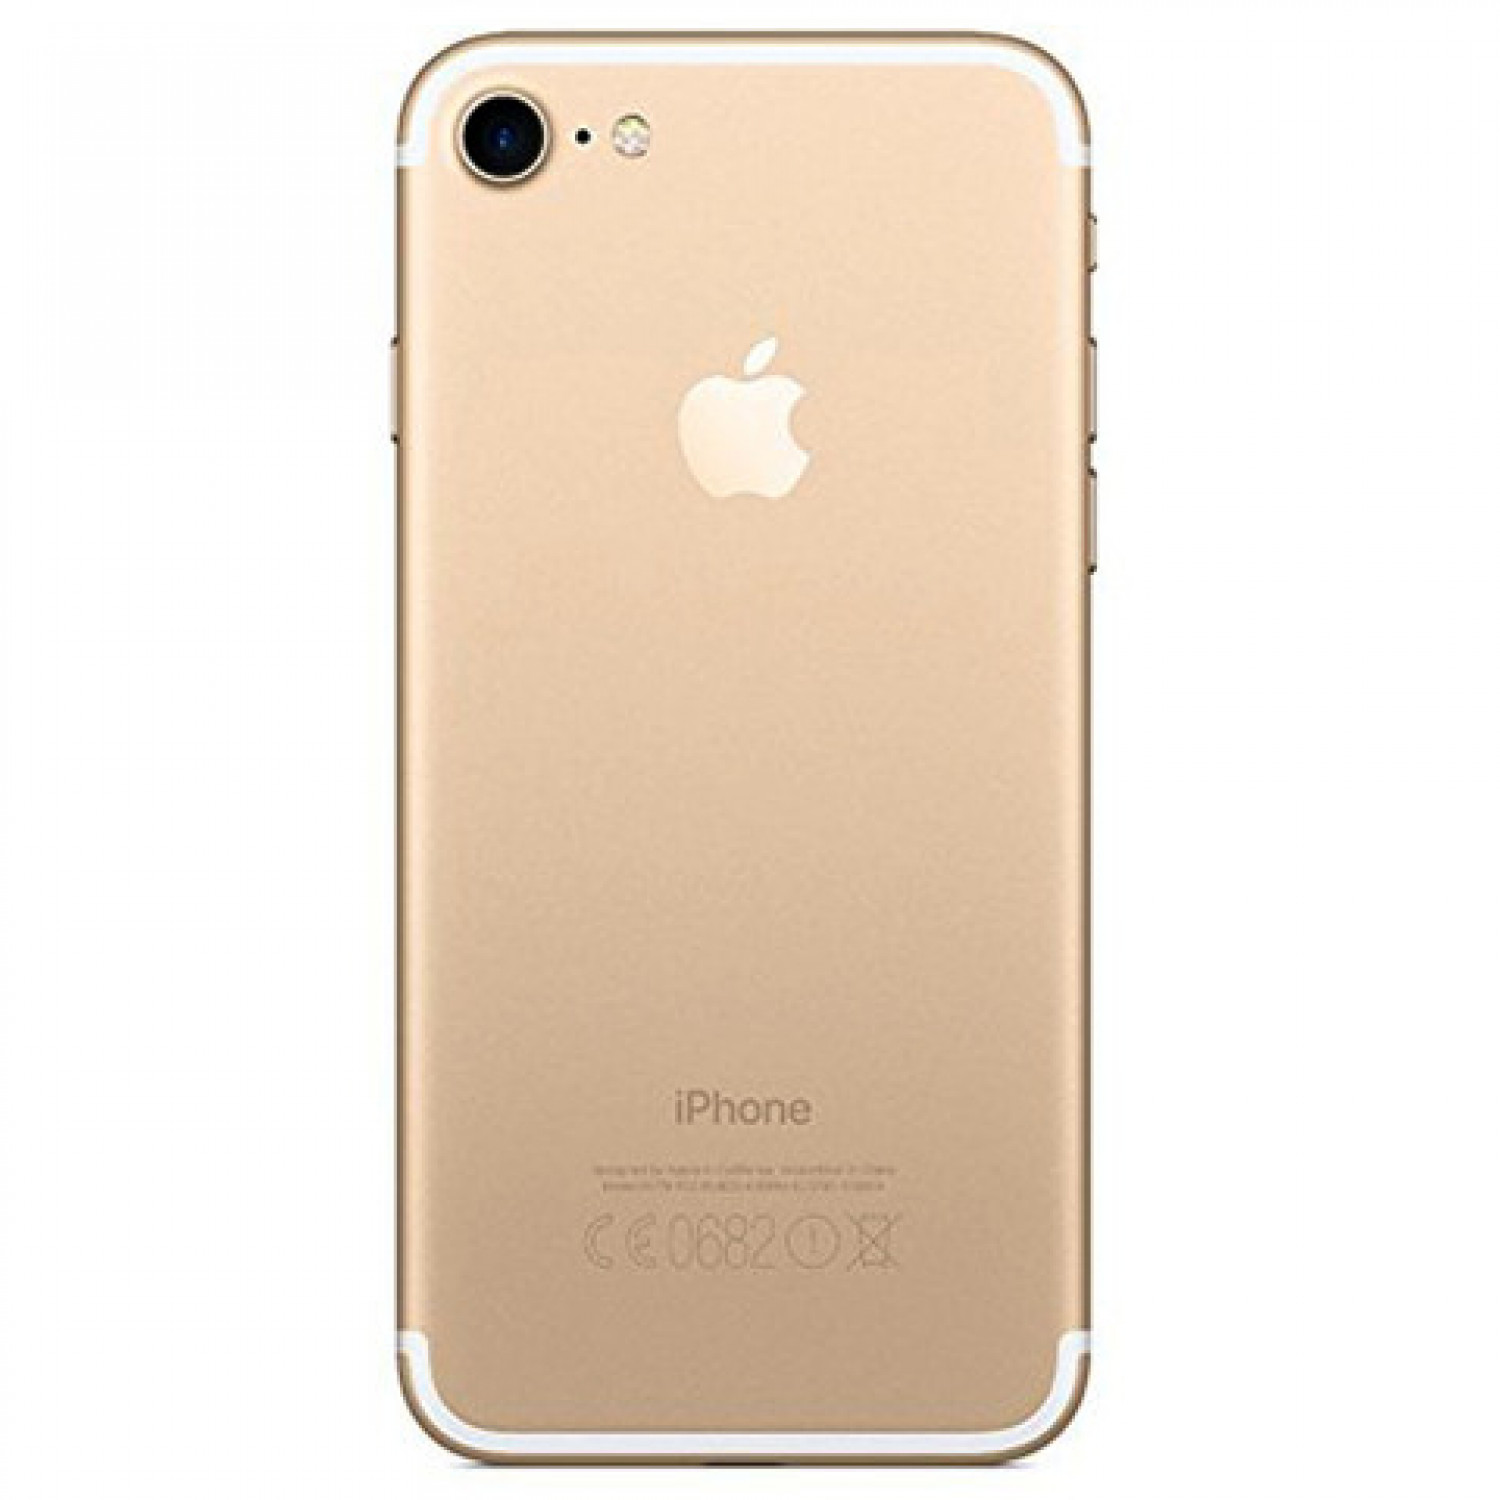 APPLE iPHONE 7,128GB-GOLD